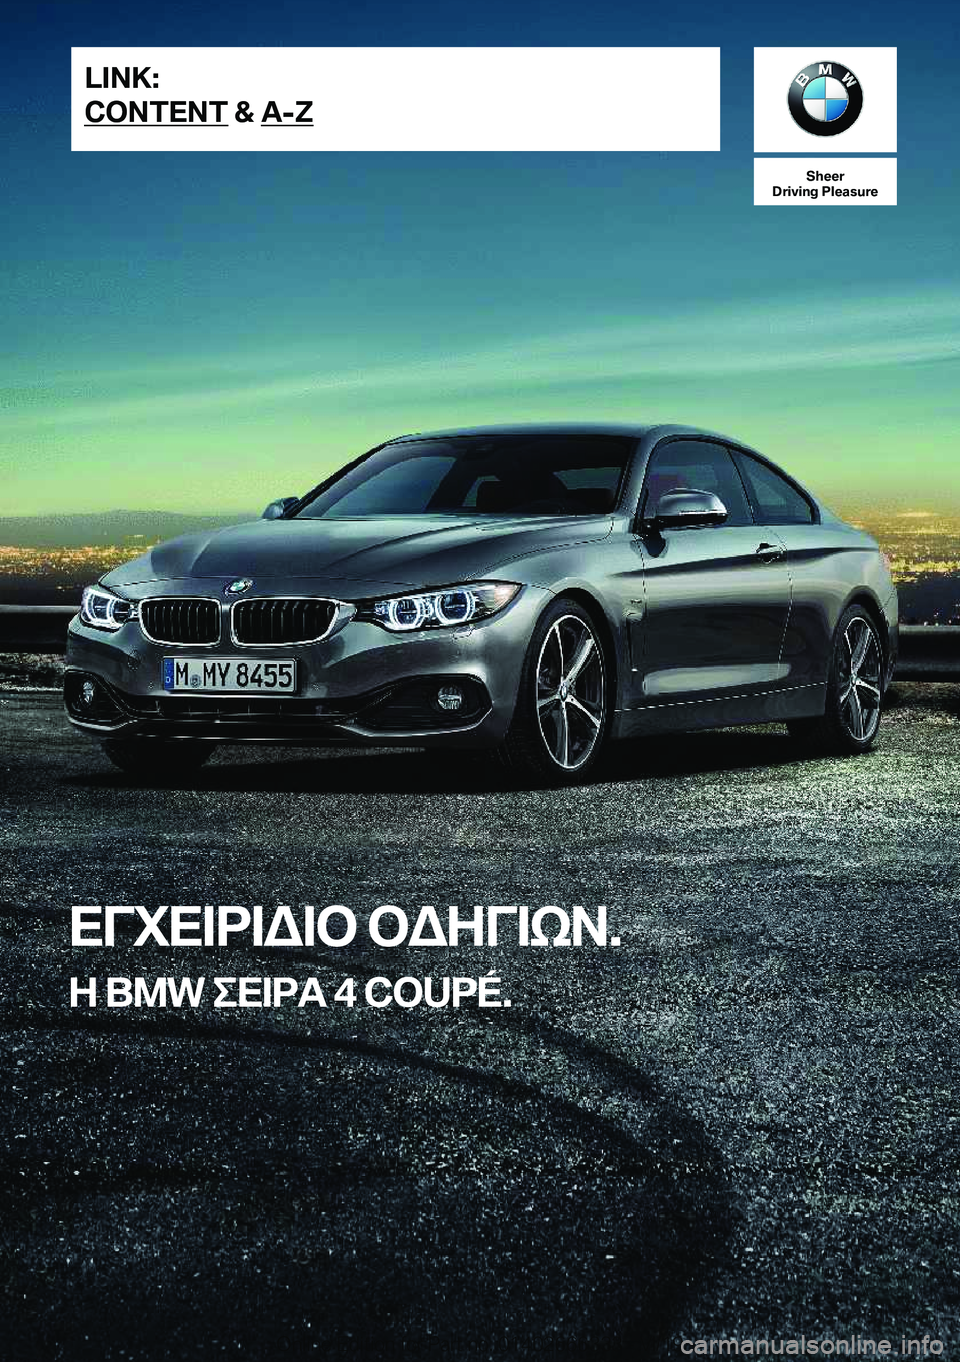 BMW 4 SERIES COUPE 2020  ΟΔΗΓΌΣ ΧΡΉΣΗΣ (in Greek) �S�h�e�e�r
�D�r�i�v�i�n�g��P�l�e�a�s�u�r�e
XViX=d=W=b�bWZV=kA�.
Z��B�M�W�eX=dT��4��C�O�U�P�